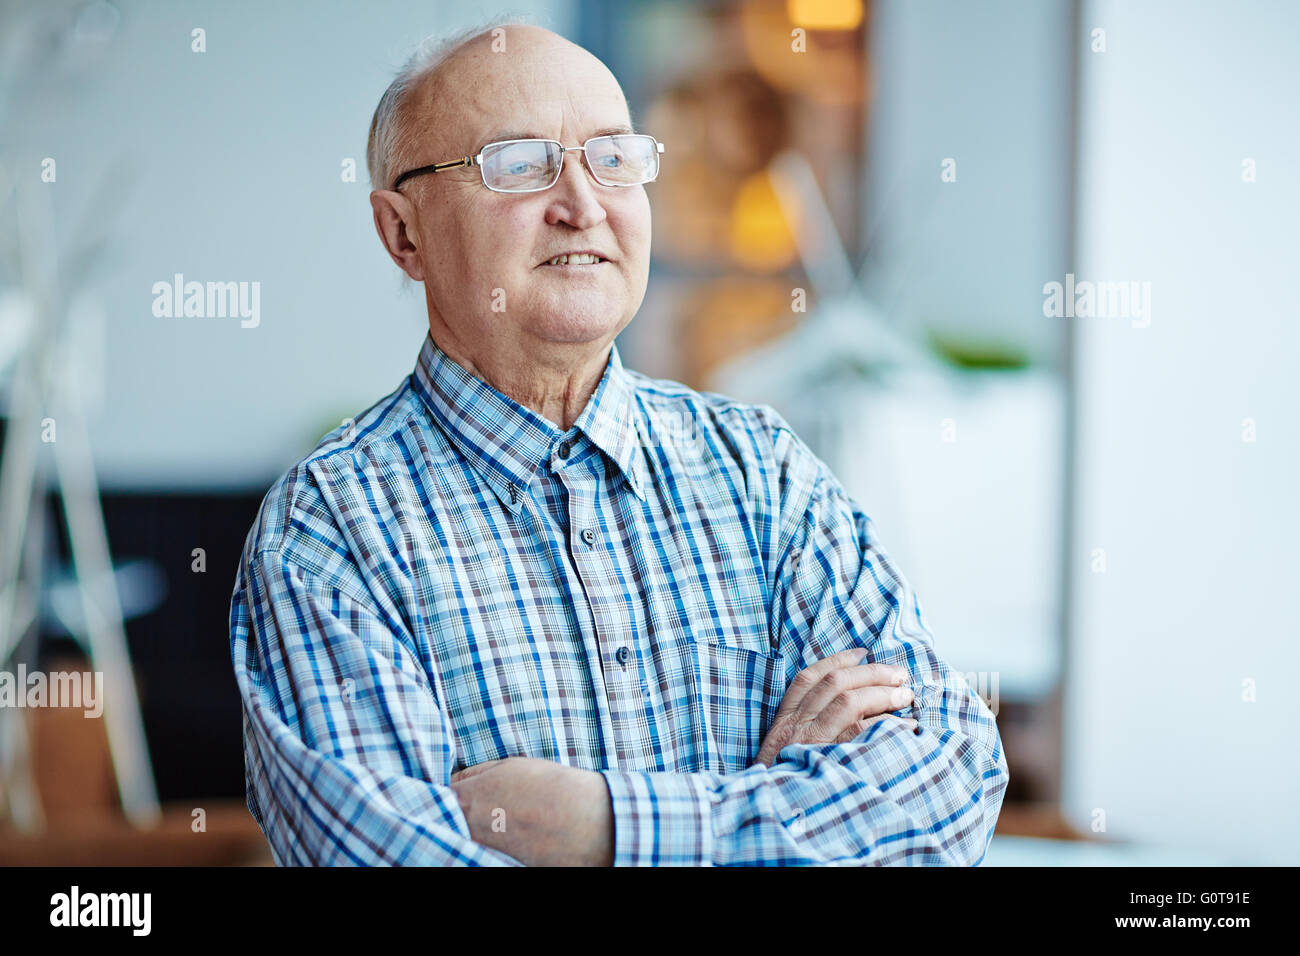 Senior man in eyeglasses Stock Photo